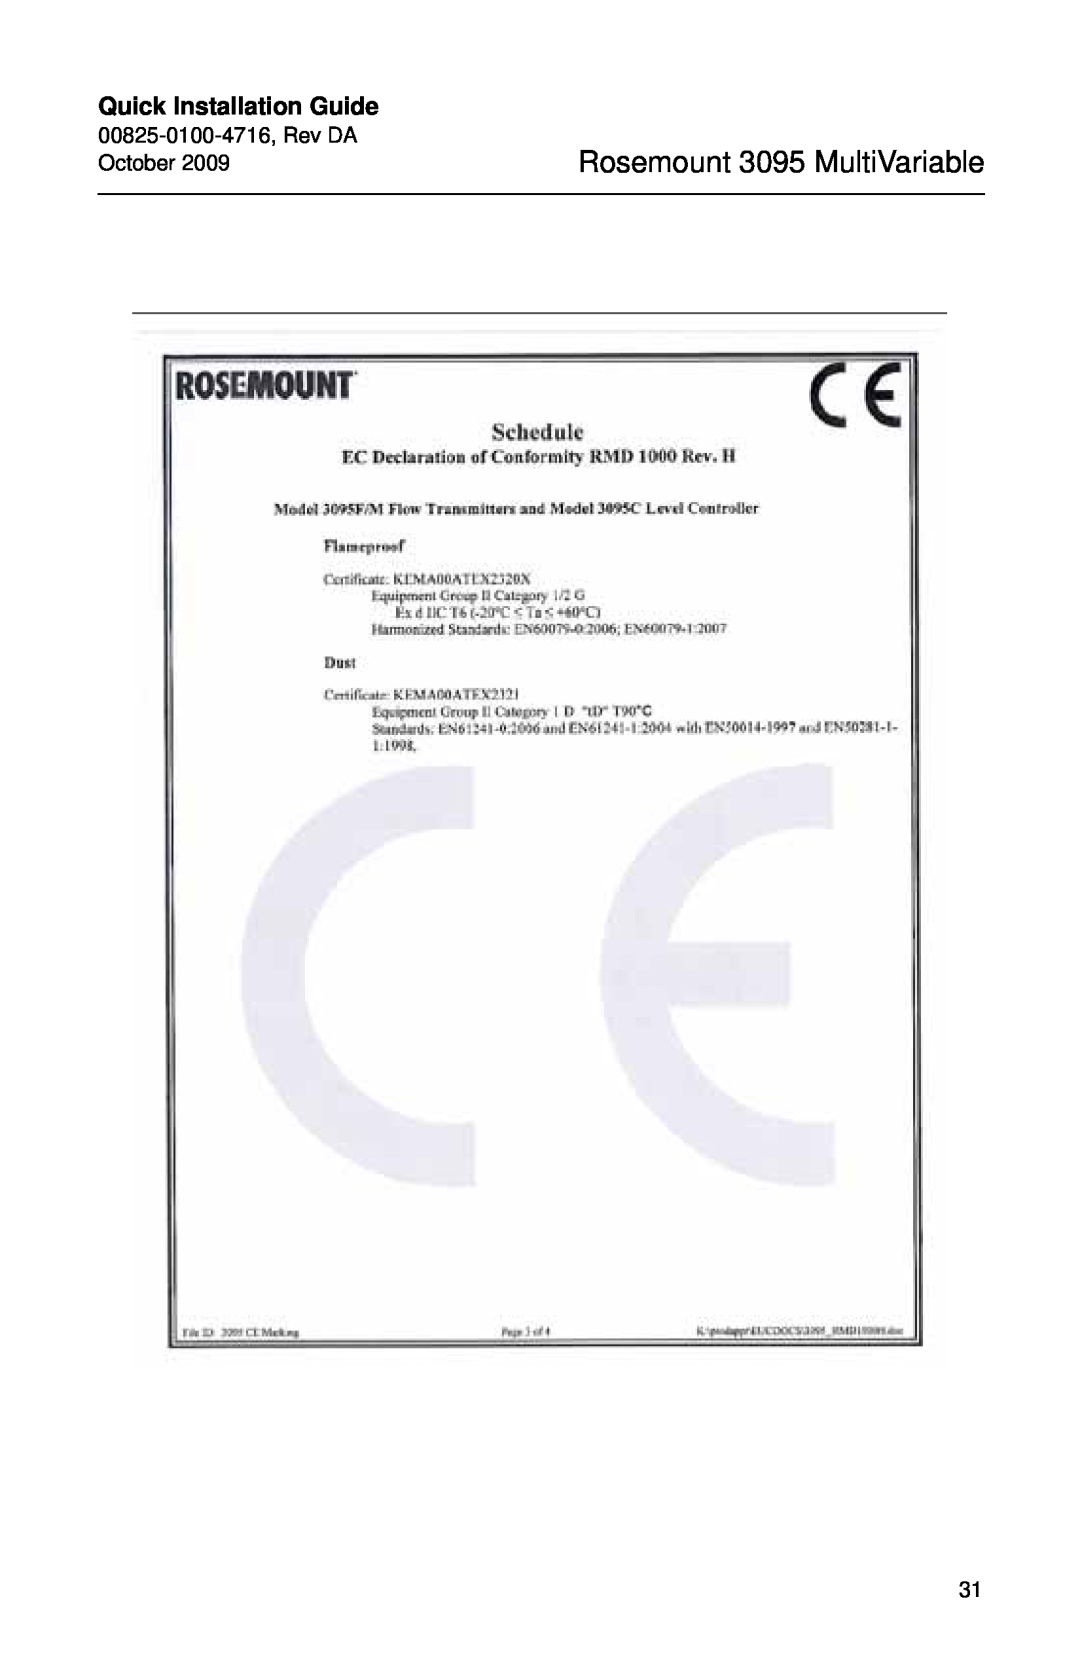 Emerson 00825-0100-4716 manual Rosemount 3095 MultiVariable, Quick Installation Guide 